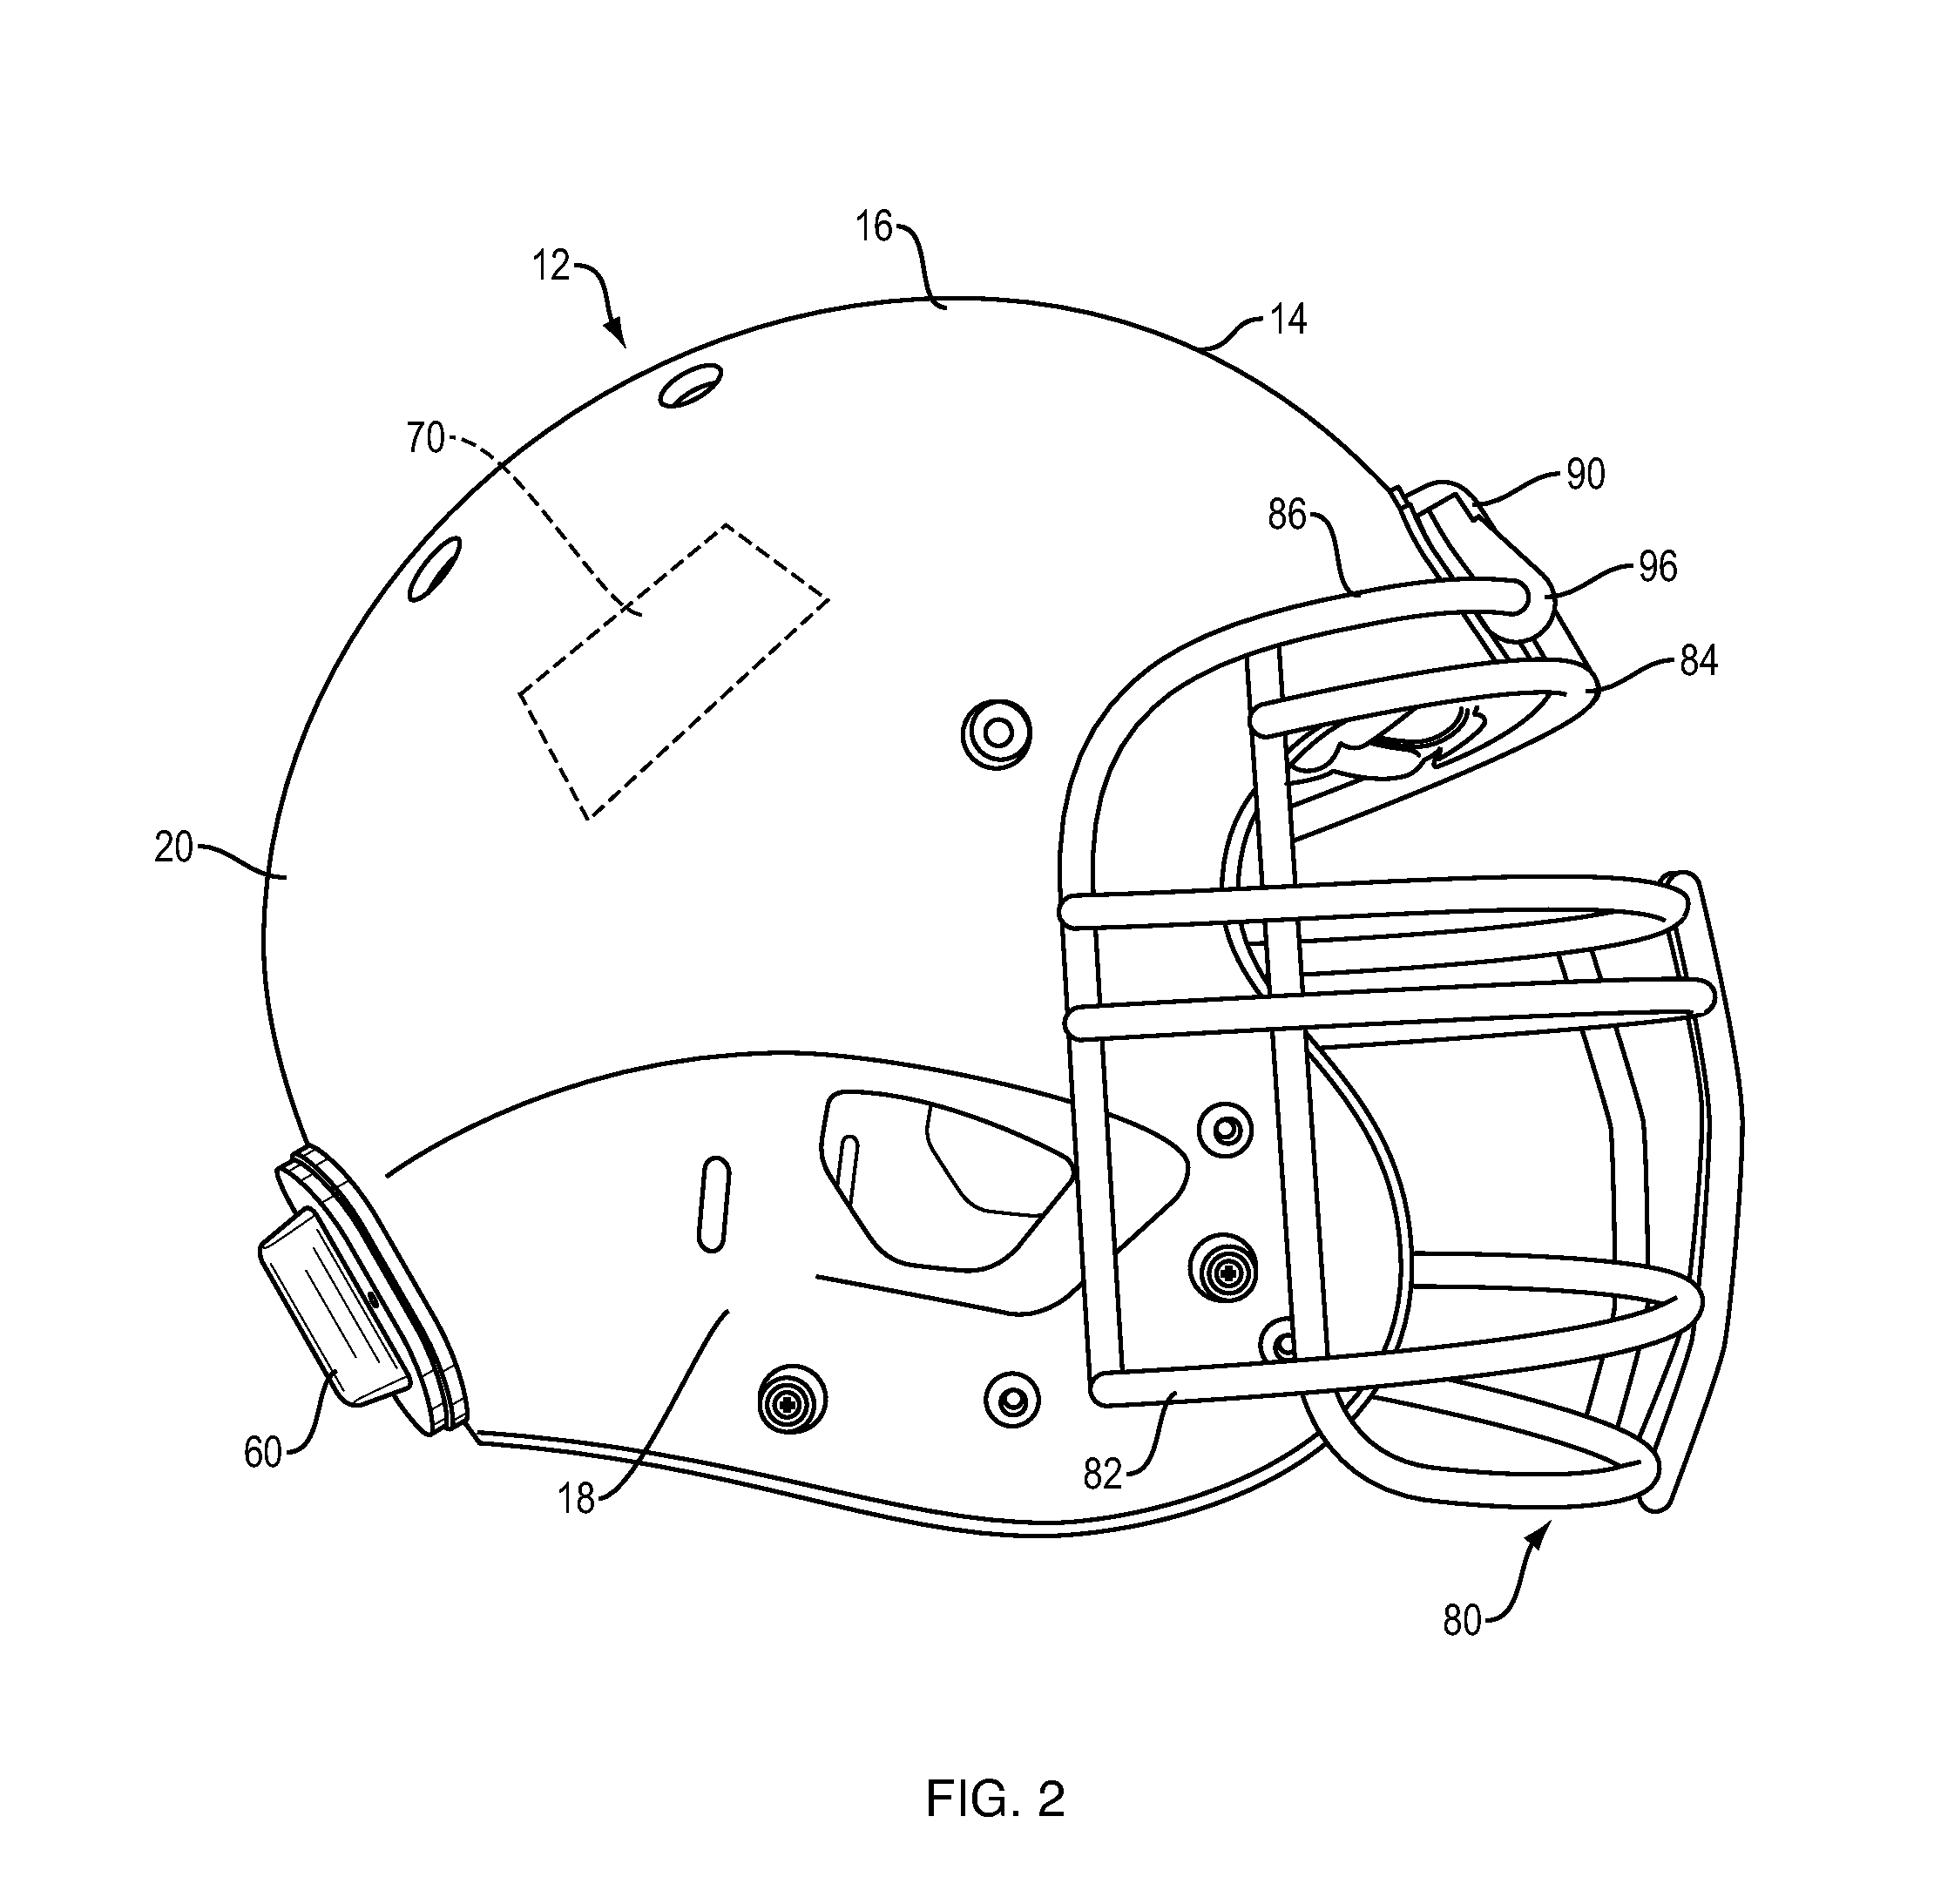 Video camera housing for football helmet